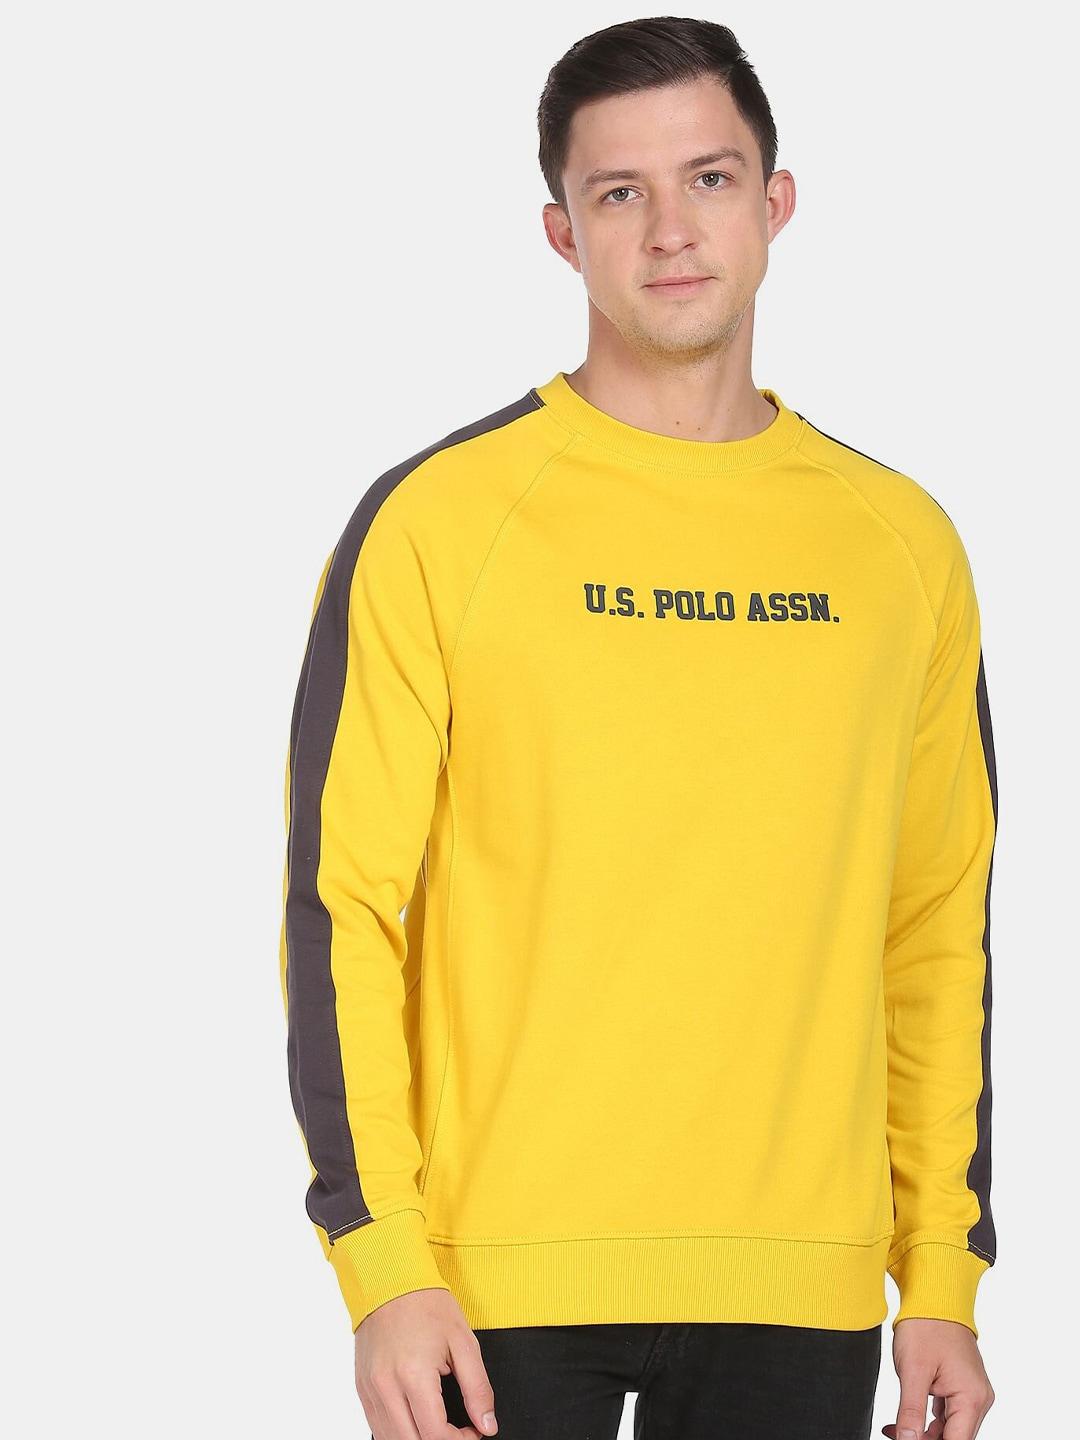 U S Polo Assn Denim Co Men Yellow Printed Sweatshirt